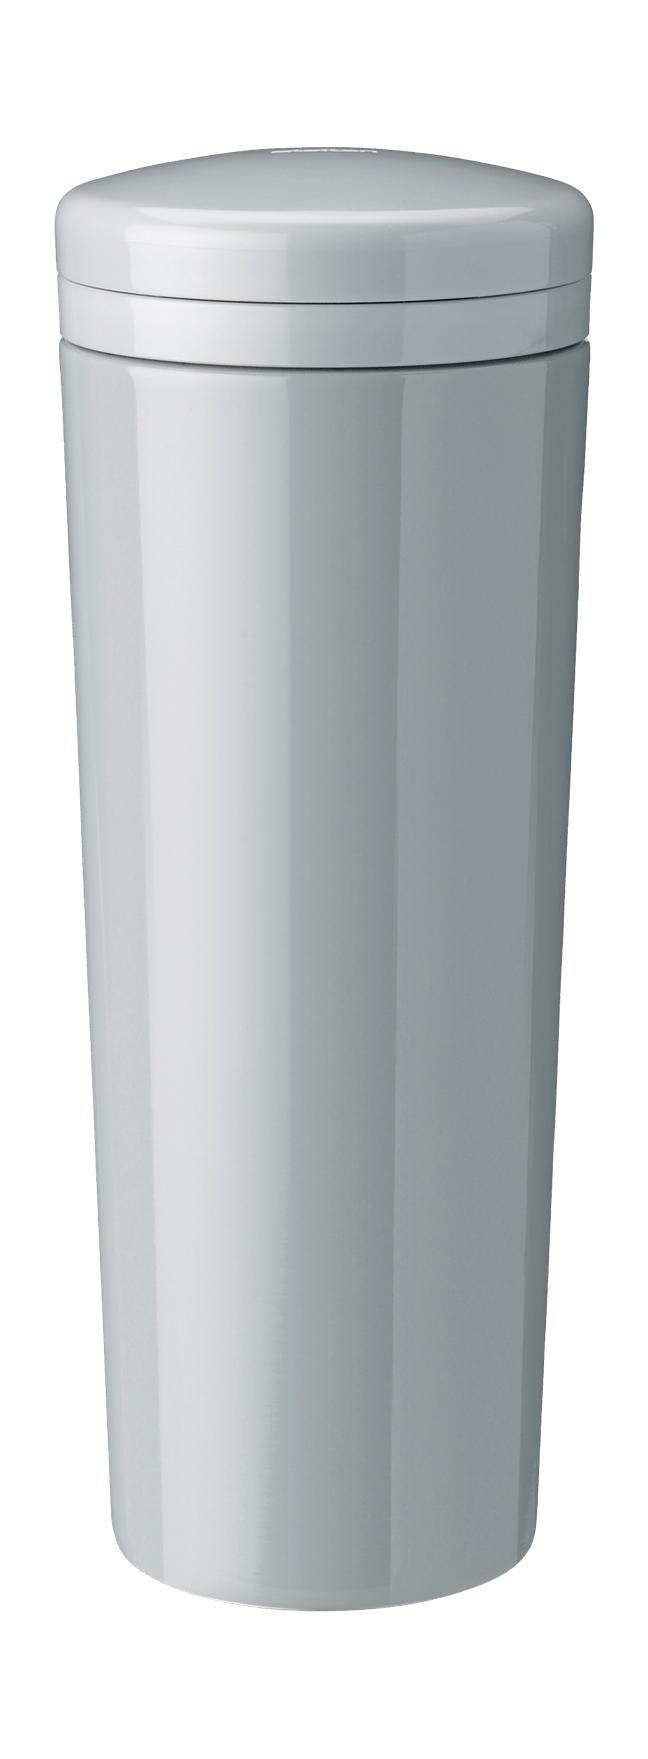 Stelton Carrie Termoflaske 0,5 L, Lysegrå